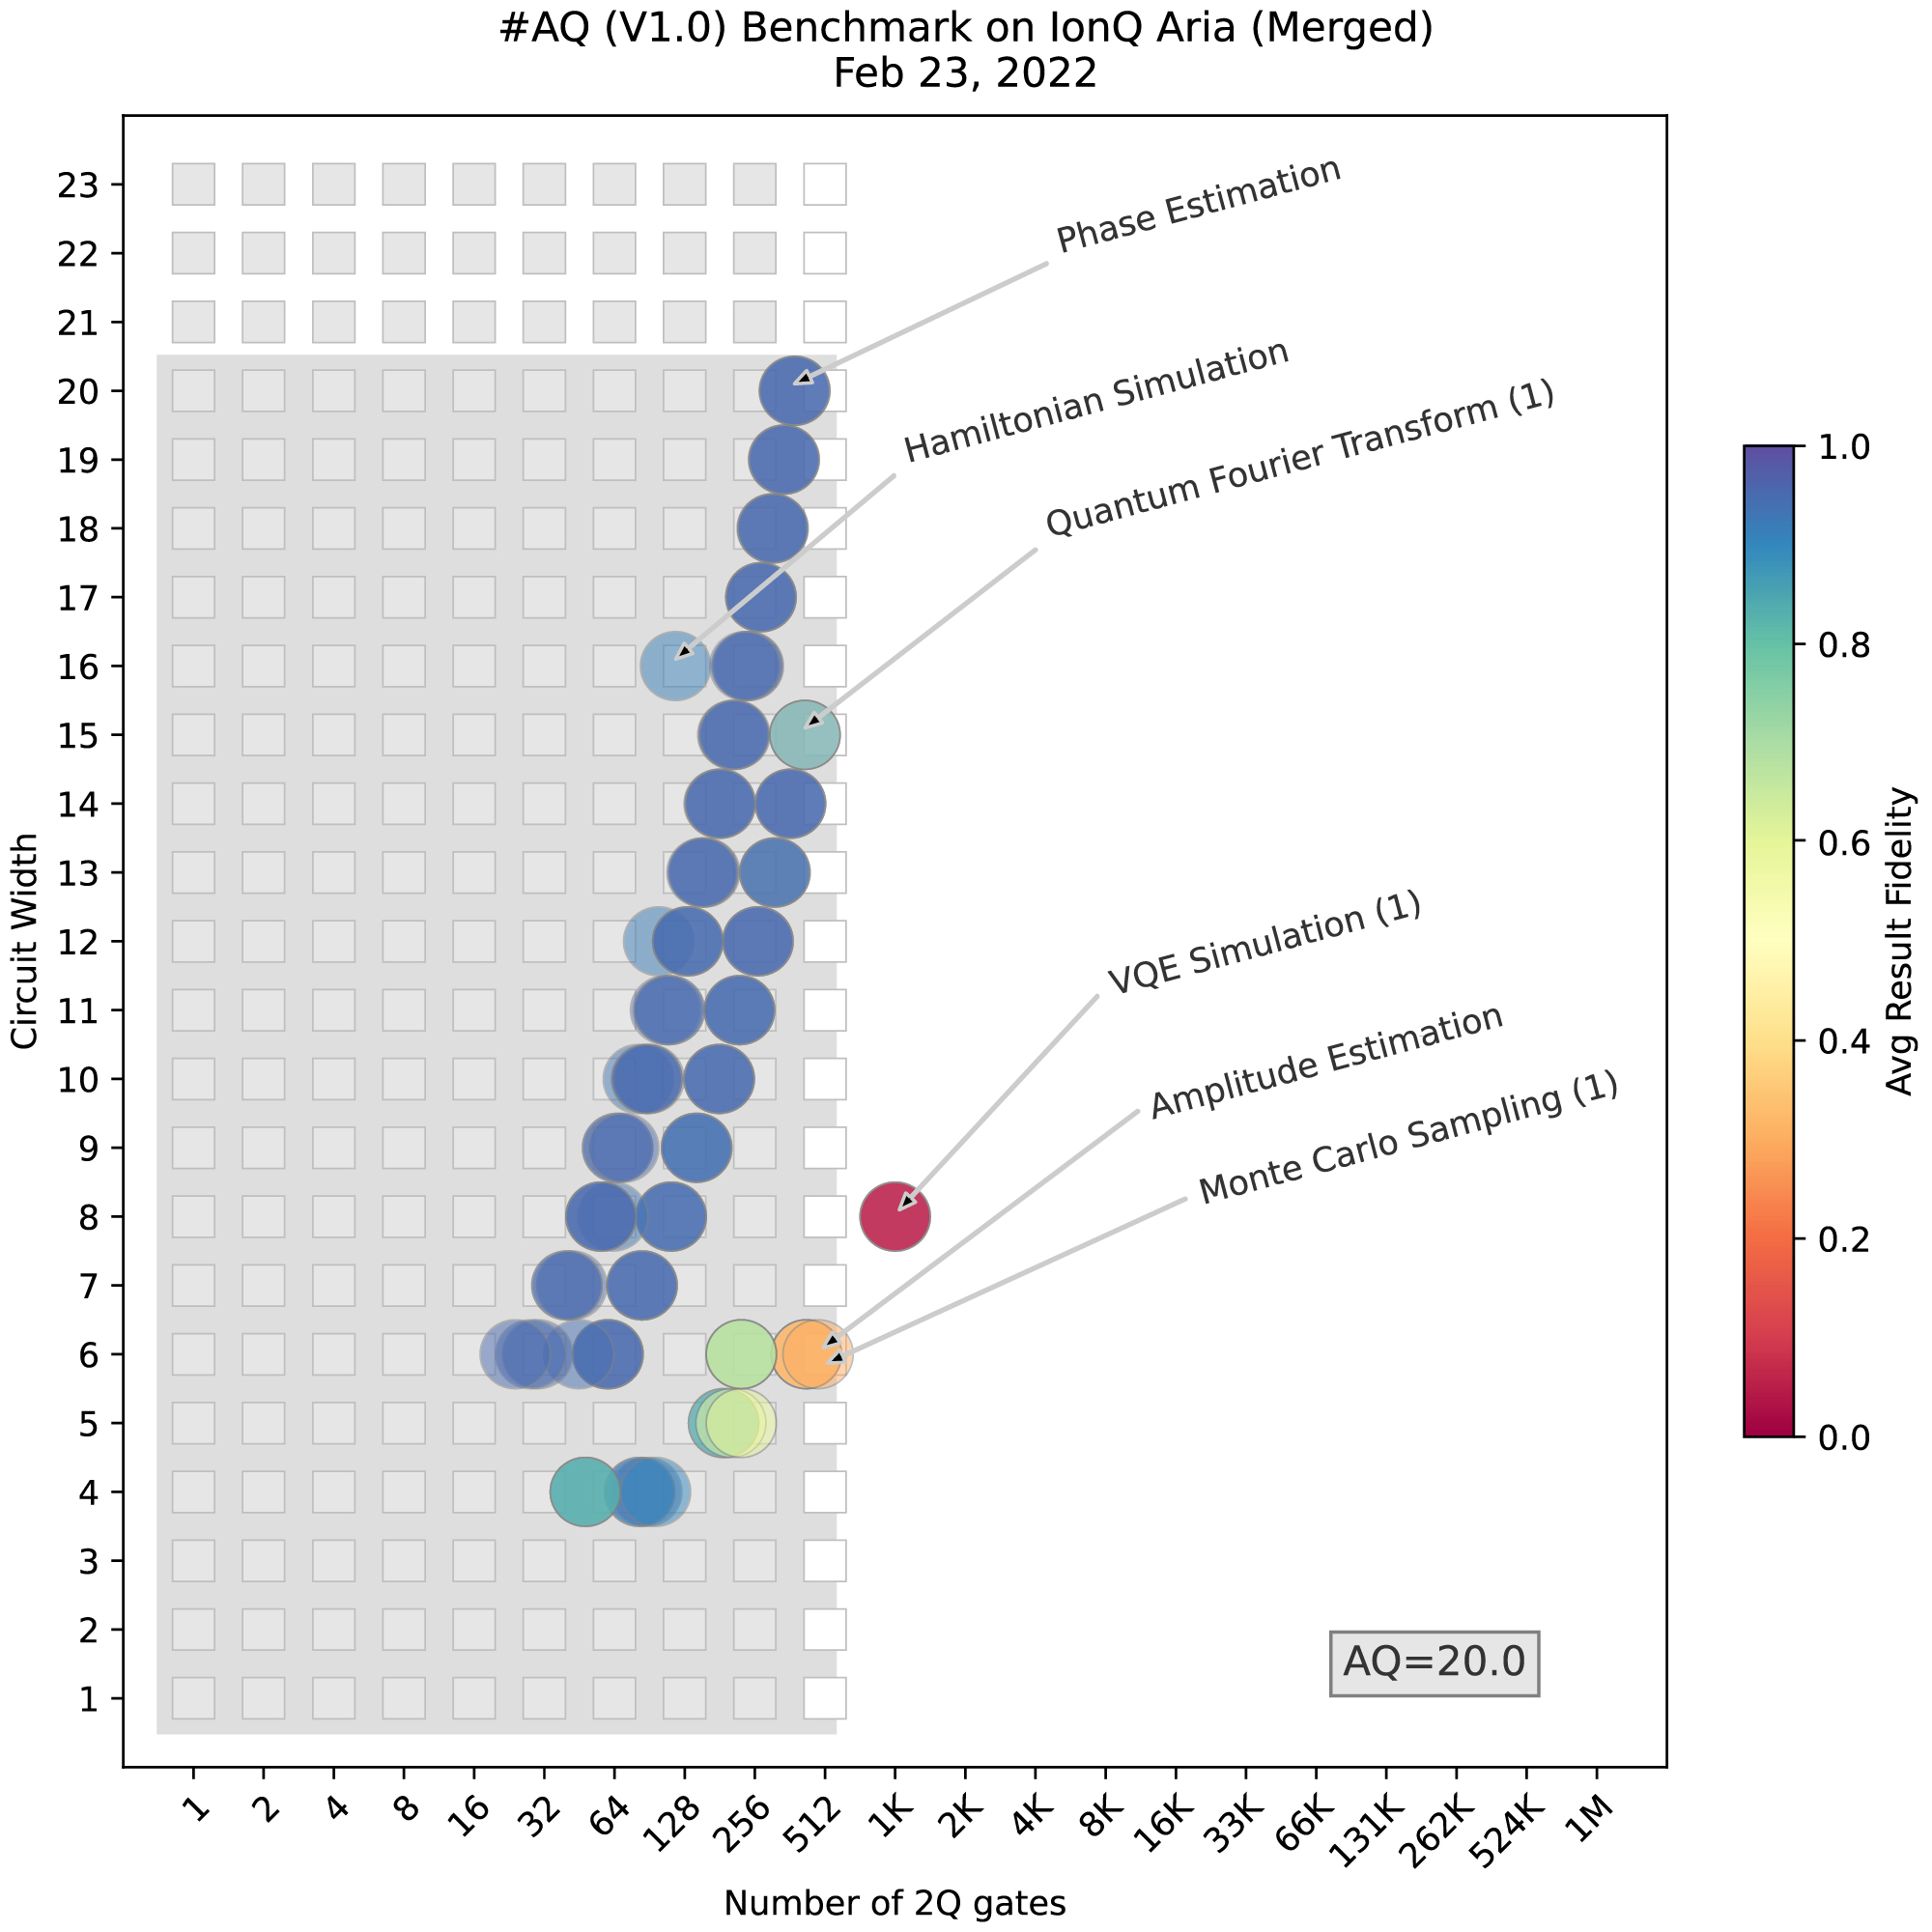 figure visualizing AQ benchmarks on IonQ Aria, showing 20 algorithmic qubits